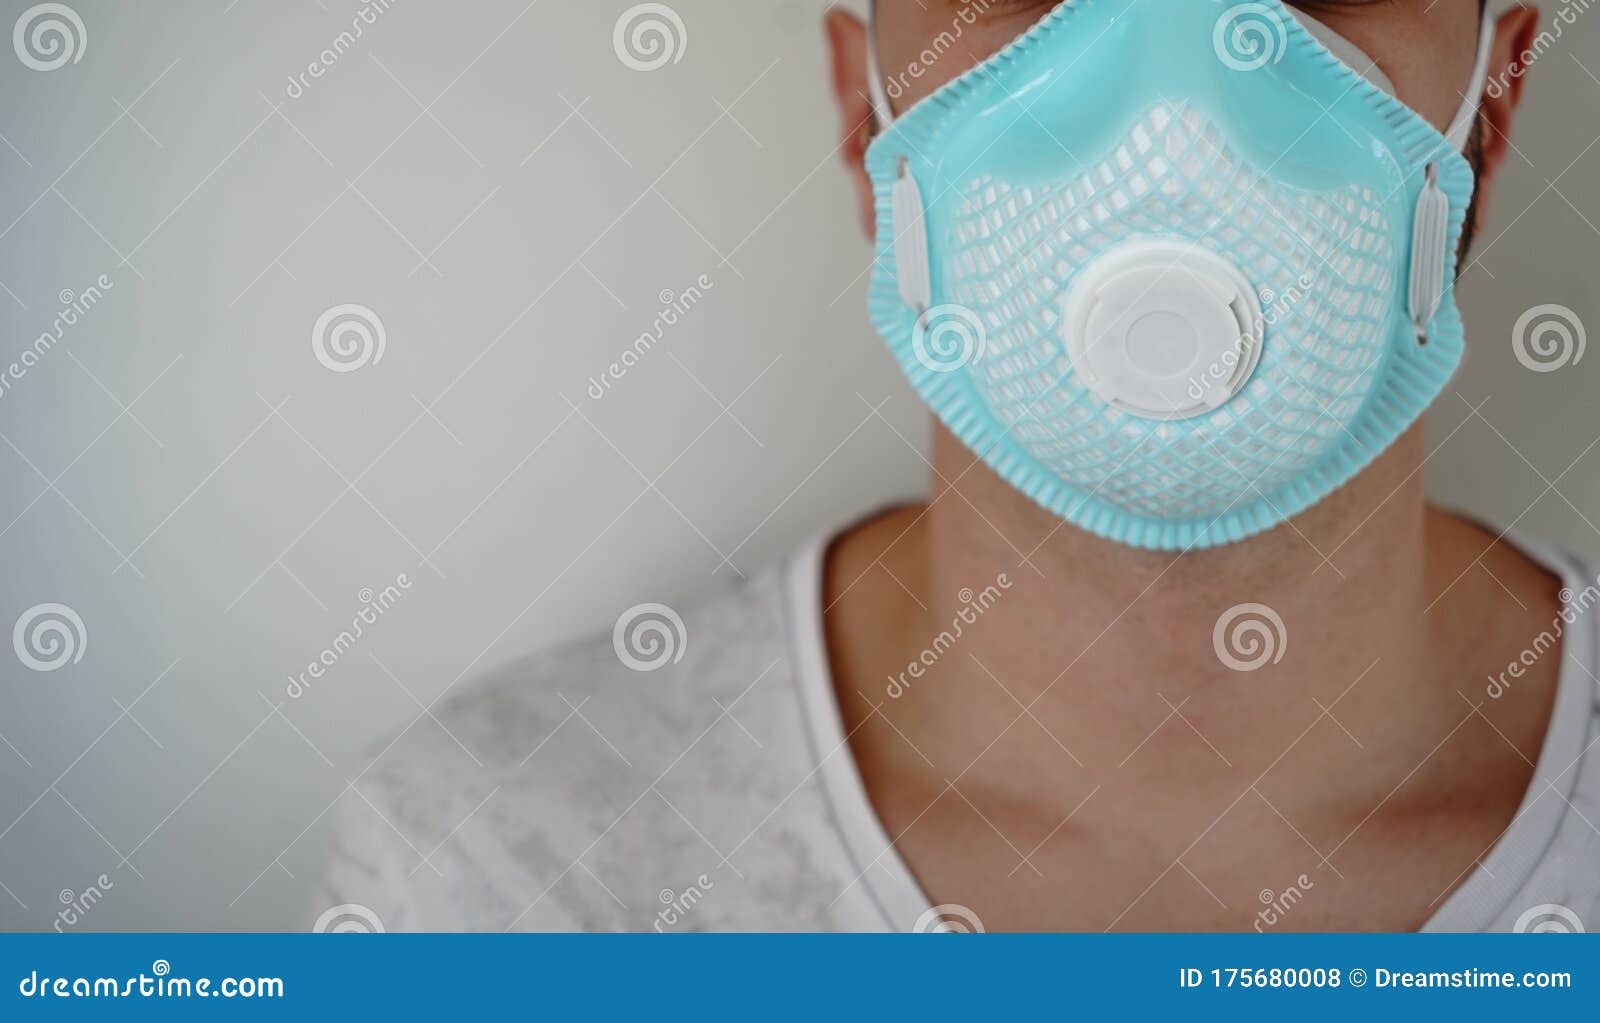 man wearing mask for prevencion coronavirus